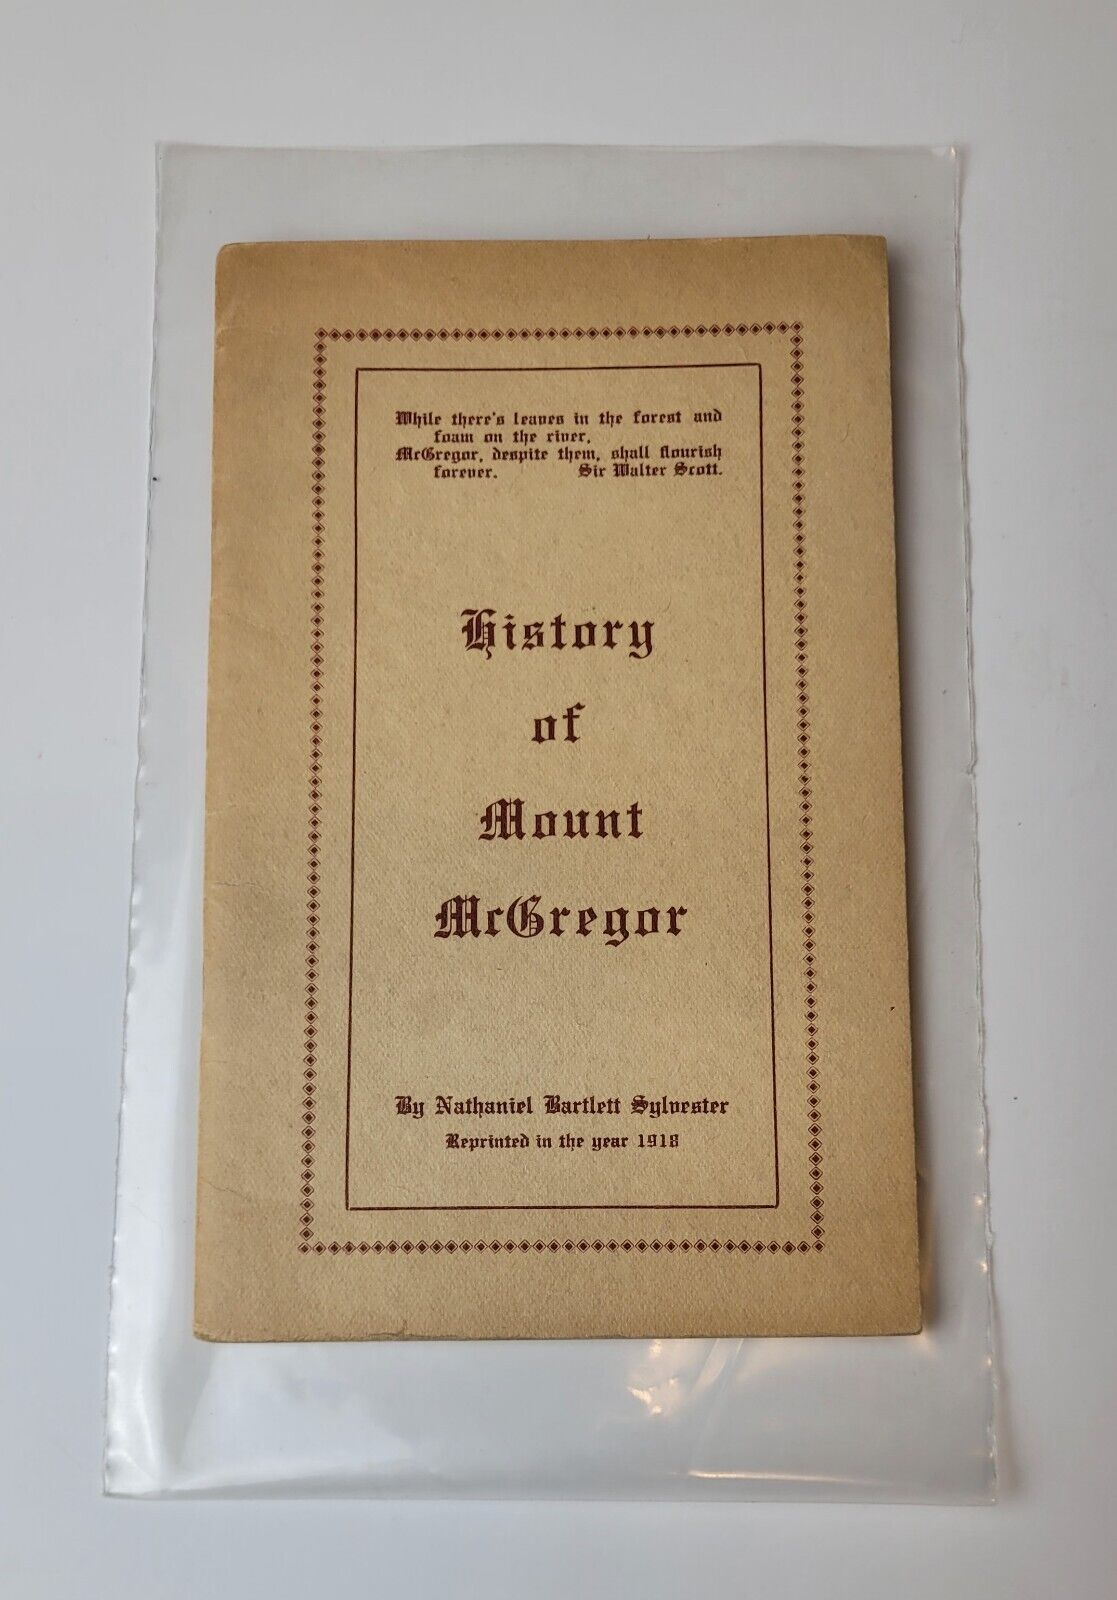 Rare 1918 SARATOGA HISTORY OF MOUNT MCGREGOR by NATHANIEL BARTLETT SYLVERTER EC